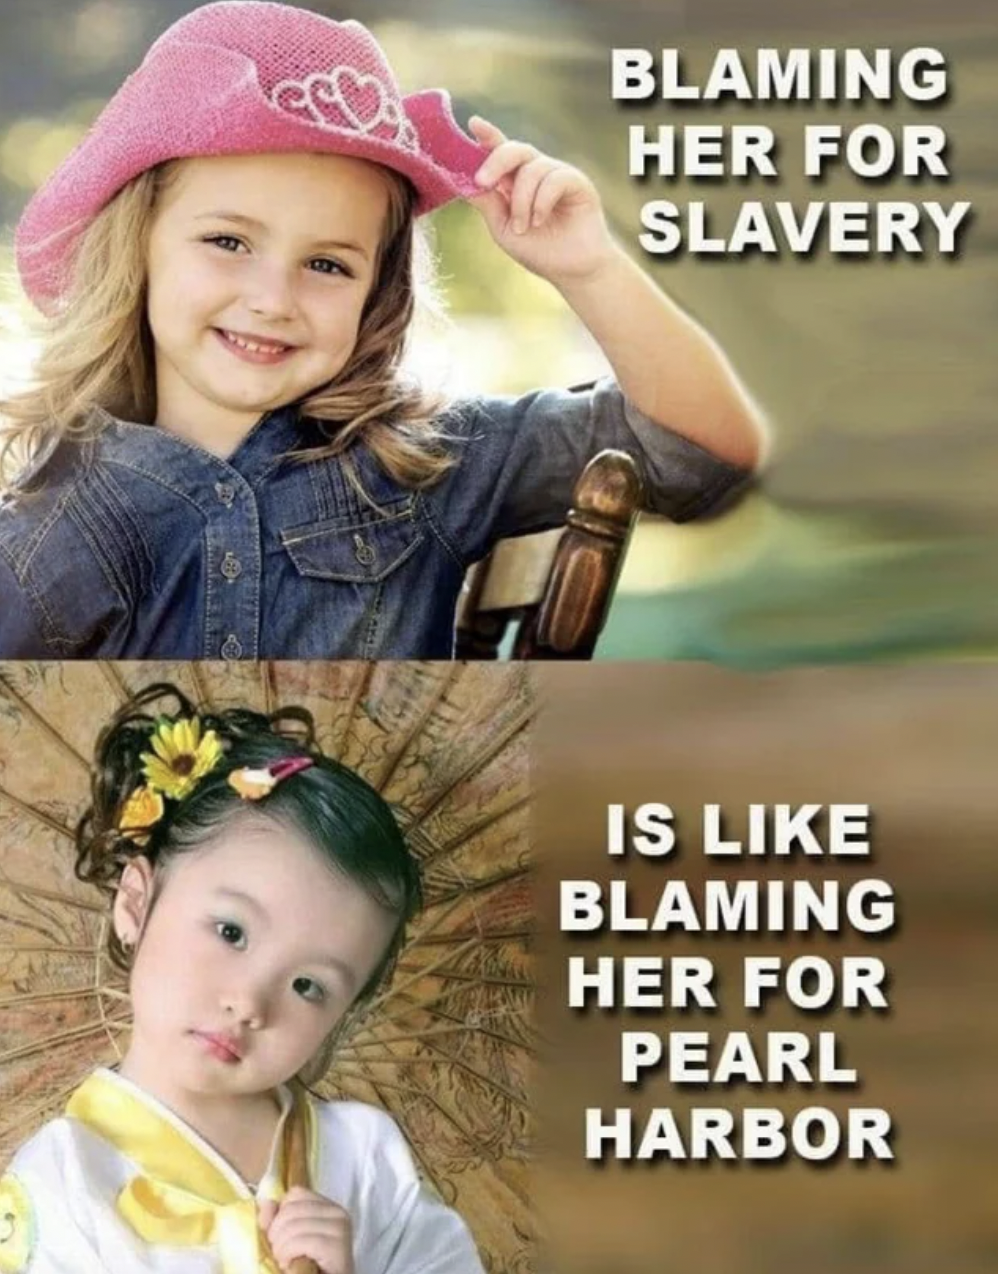 little girl smile - Blaming Her For Slavery Is Blaming Her For Pearl Harbor